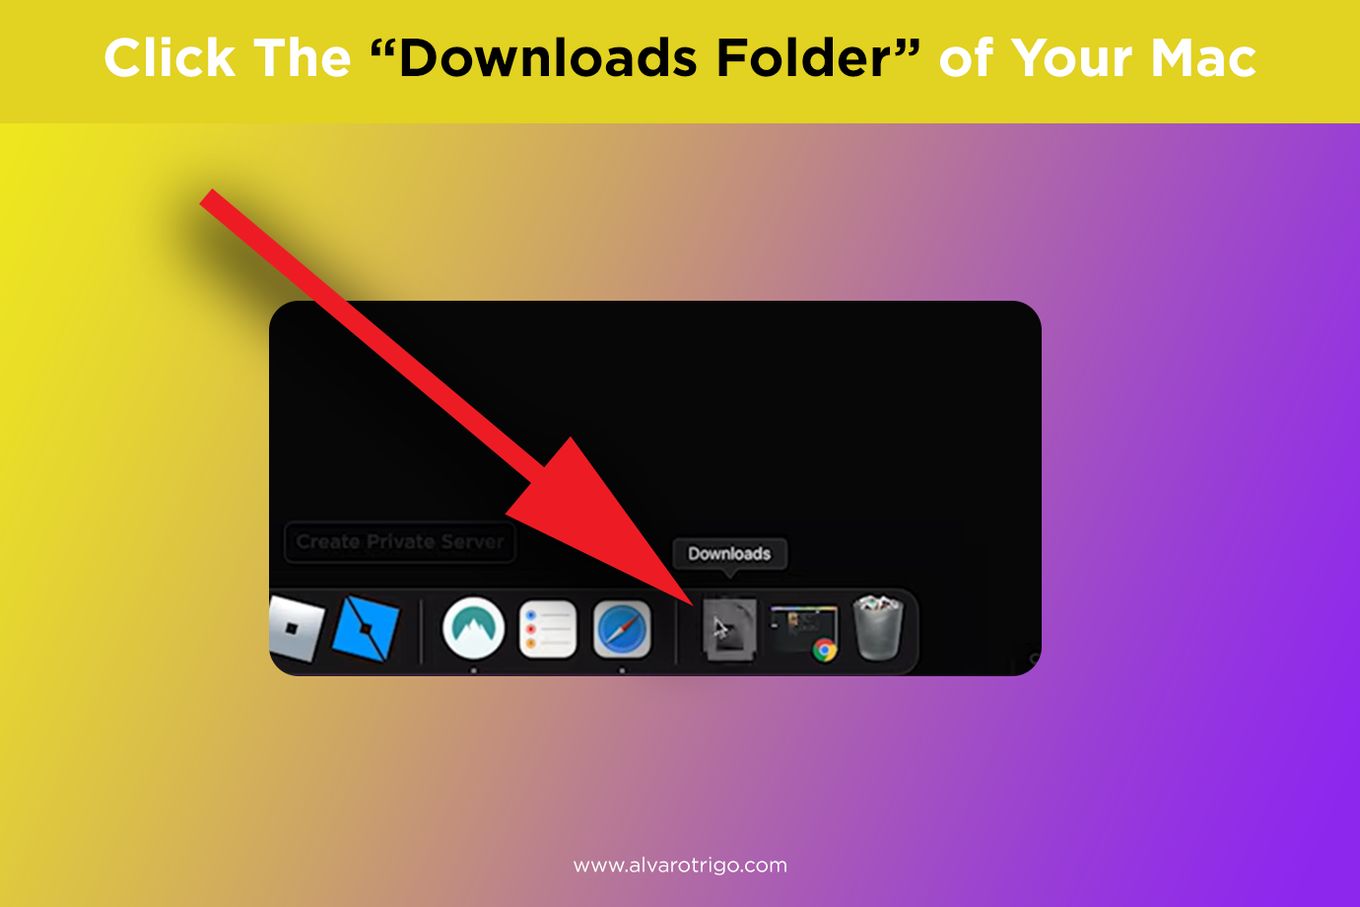 Click 'Downloads Folder' of your Mac